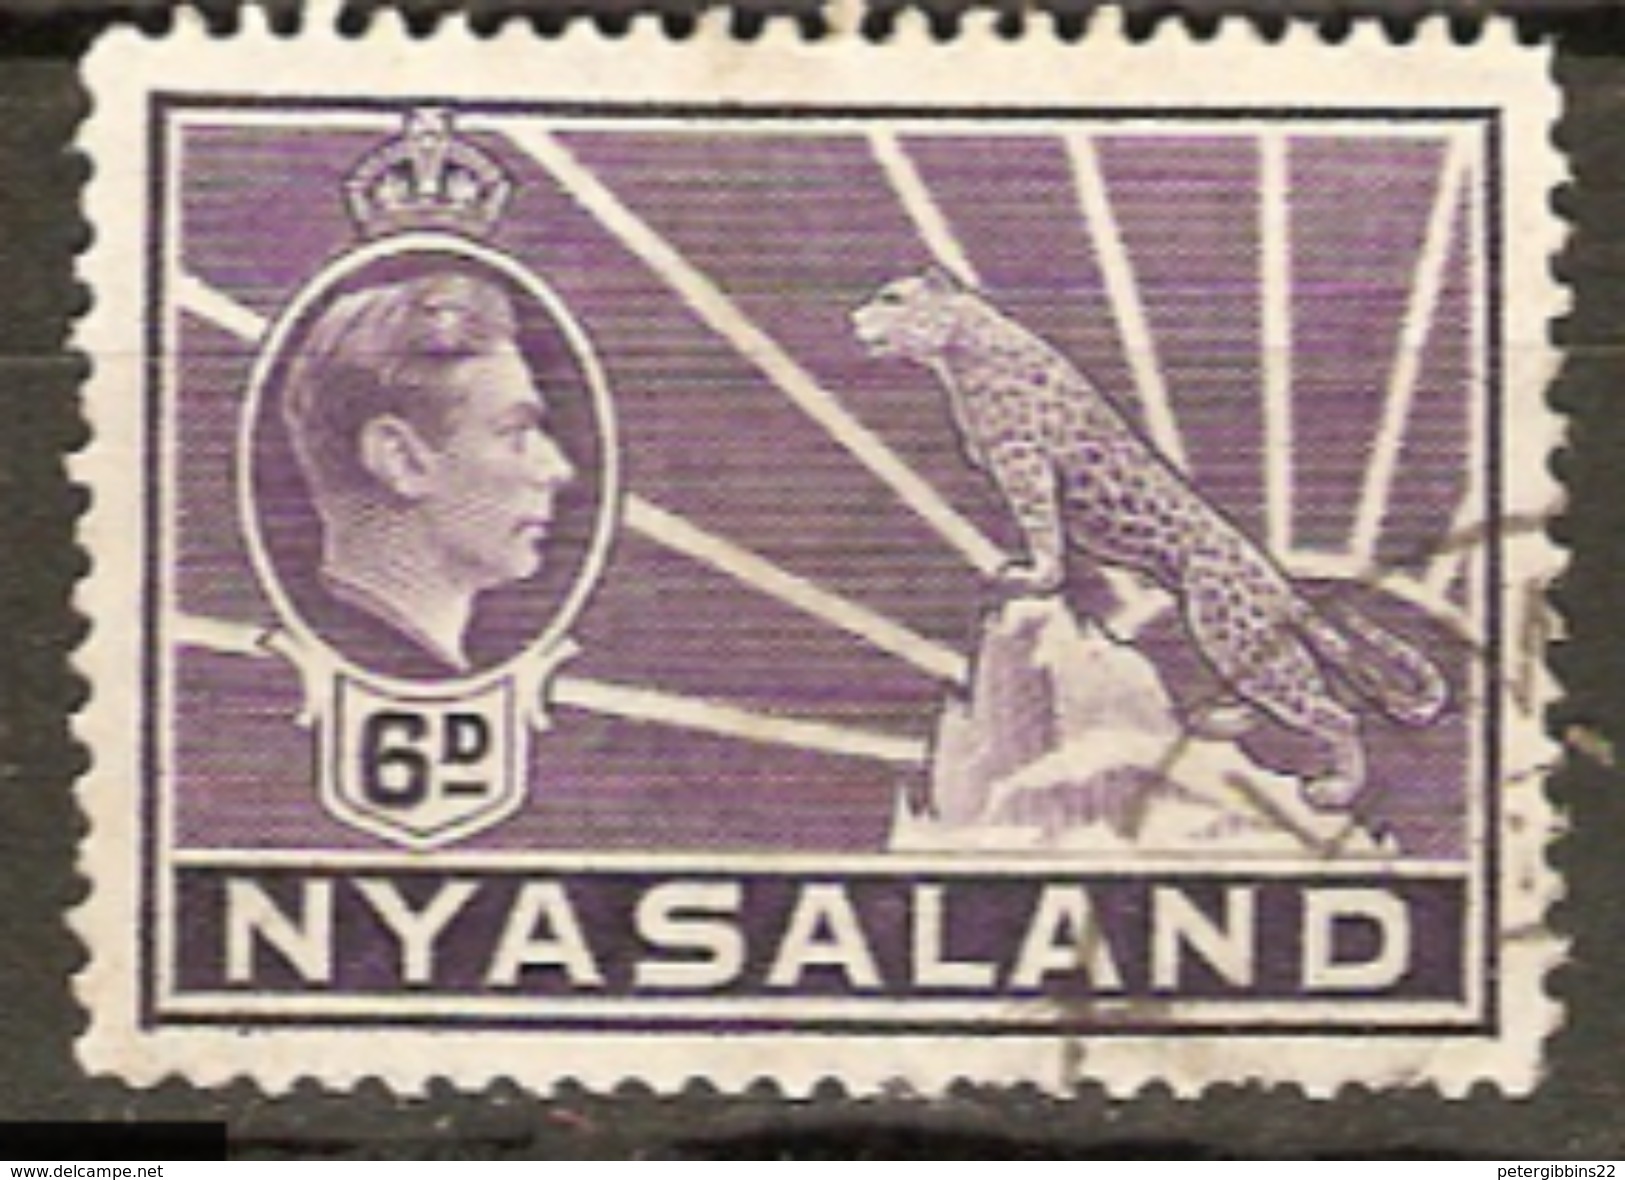 Nyasaland 1938 SG 136 6d Violet Fine Used - Nyassaland (1907-1953)